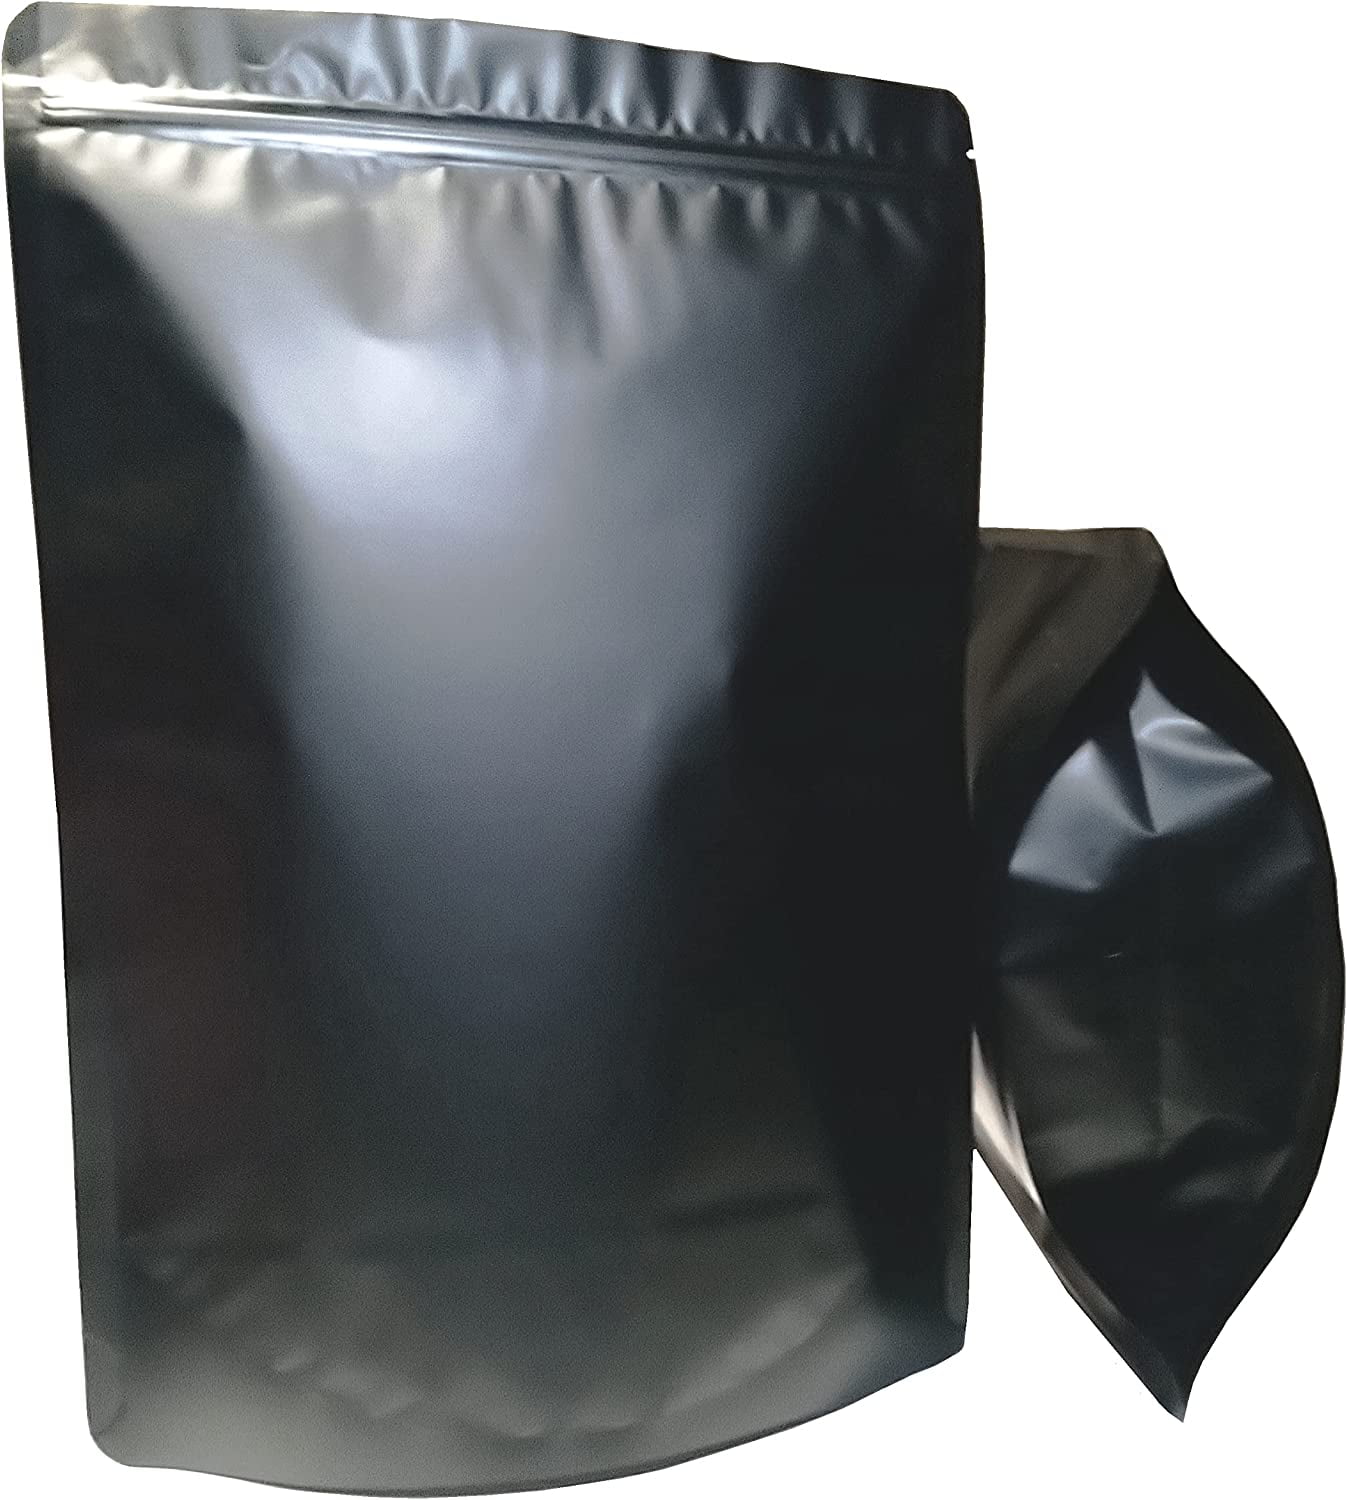 5 Gallon Mylar Bags 9.5 Mil Thick Ziplock Resealable Mylar Bags